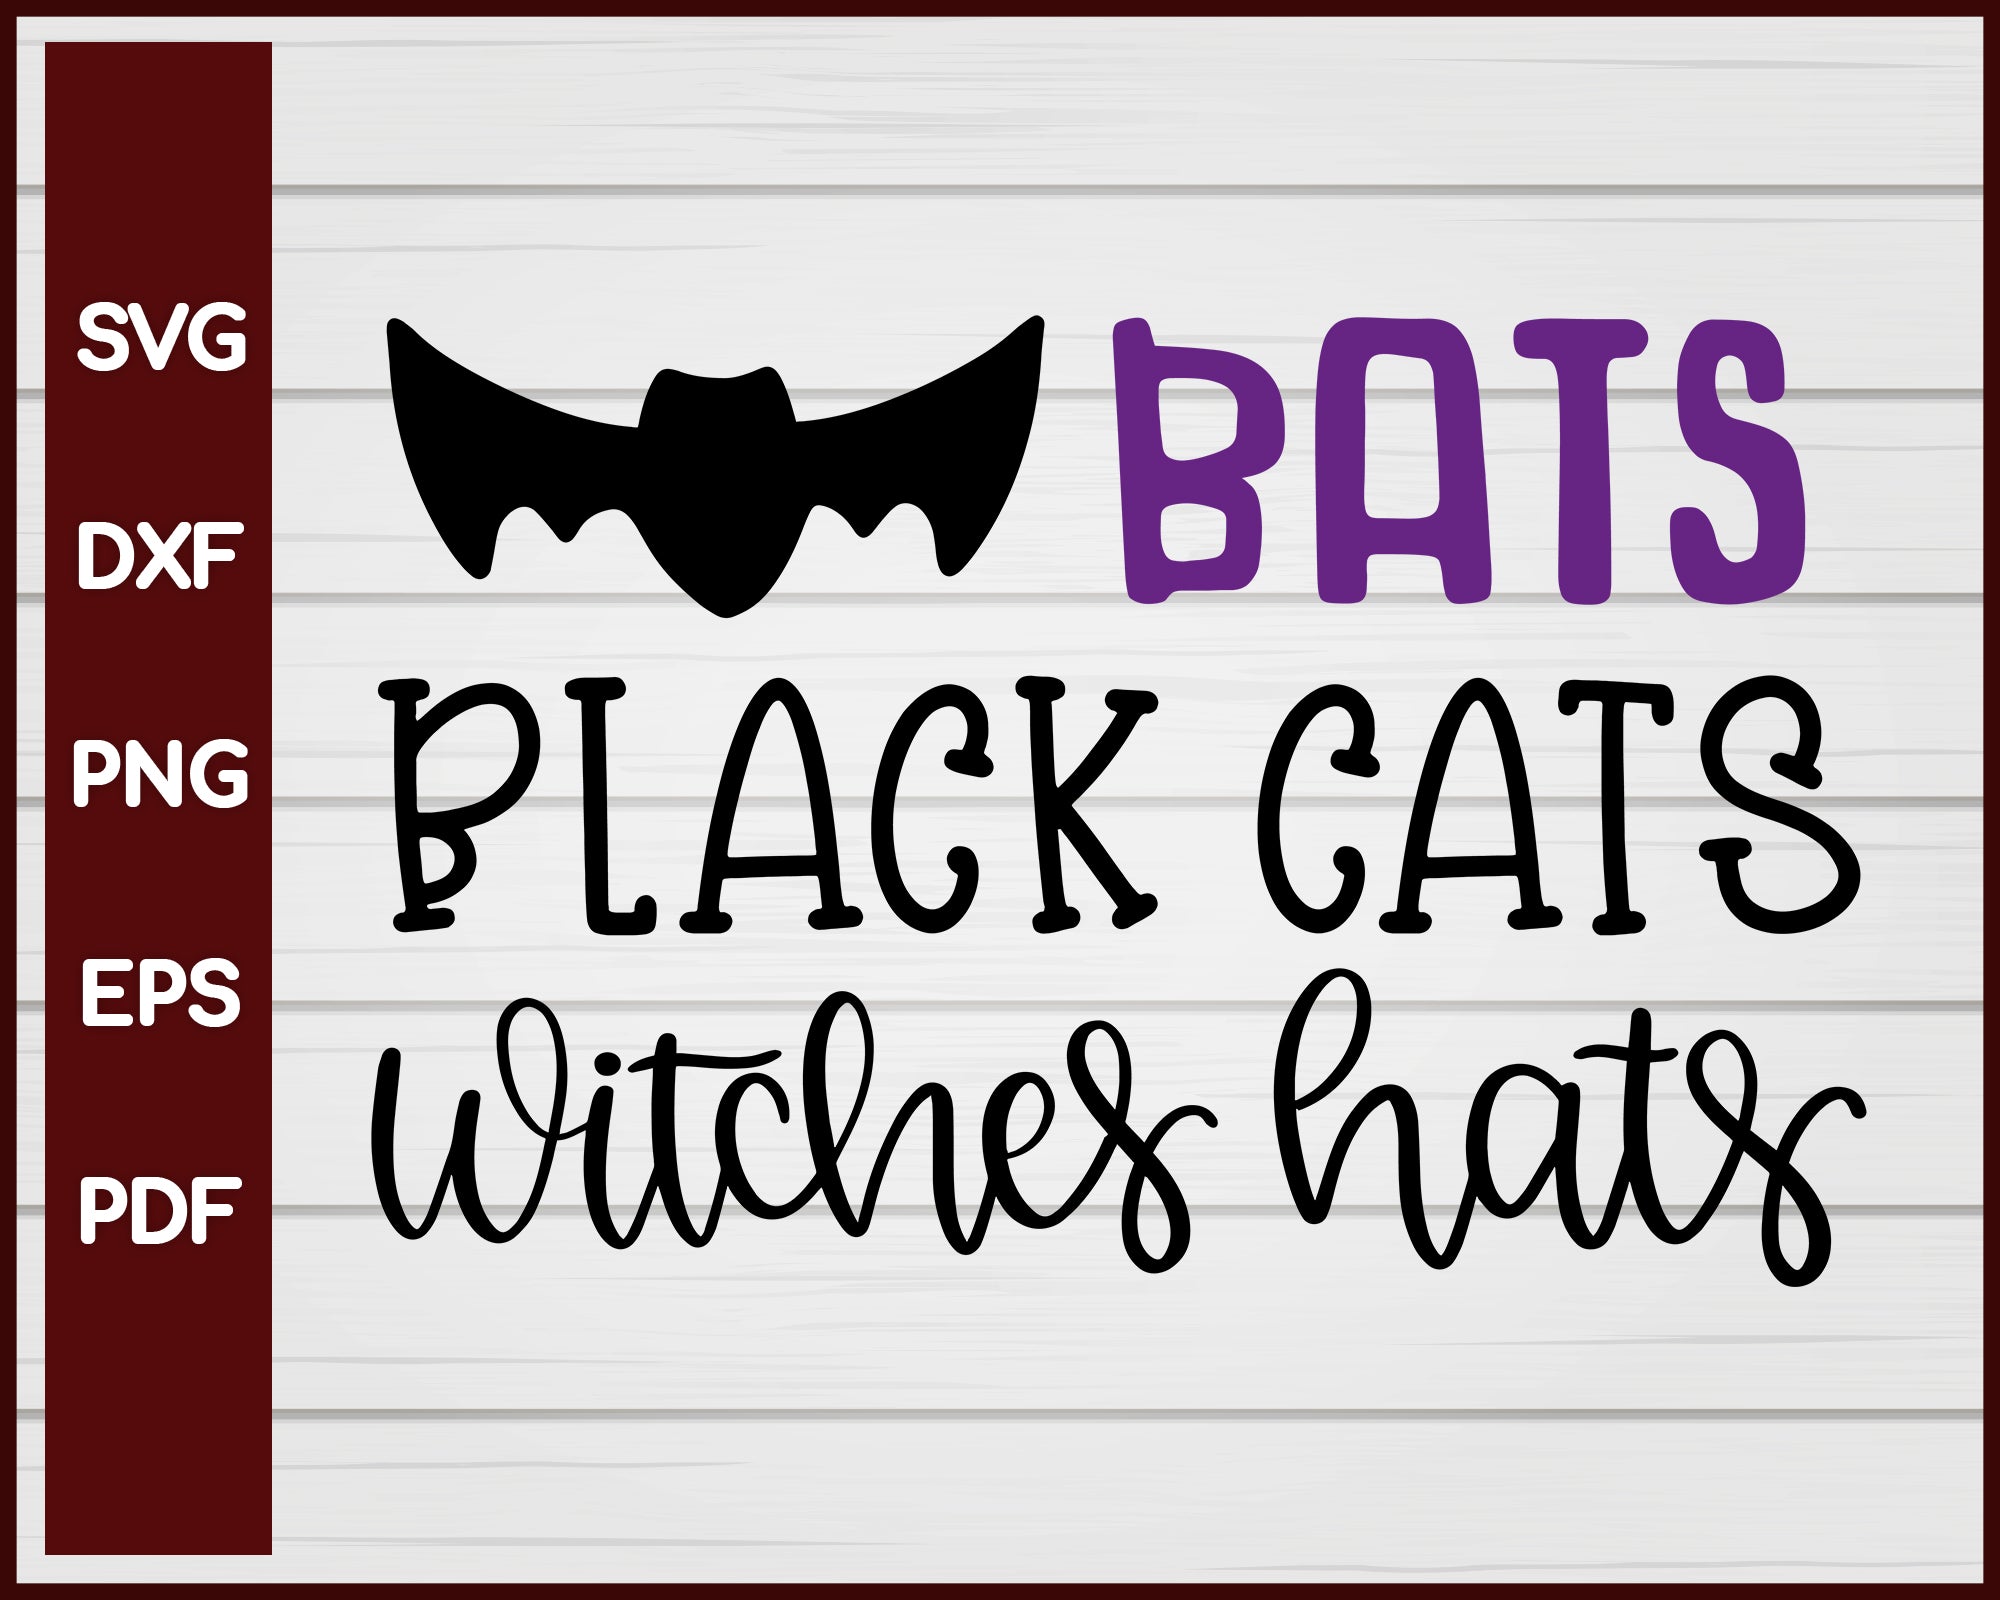 Bats Black Cats Witches Hats Halloween T-shirt Design svg